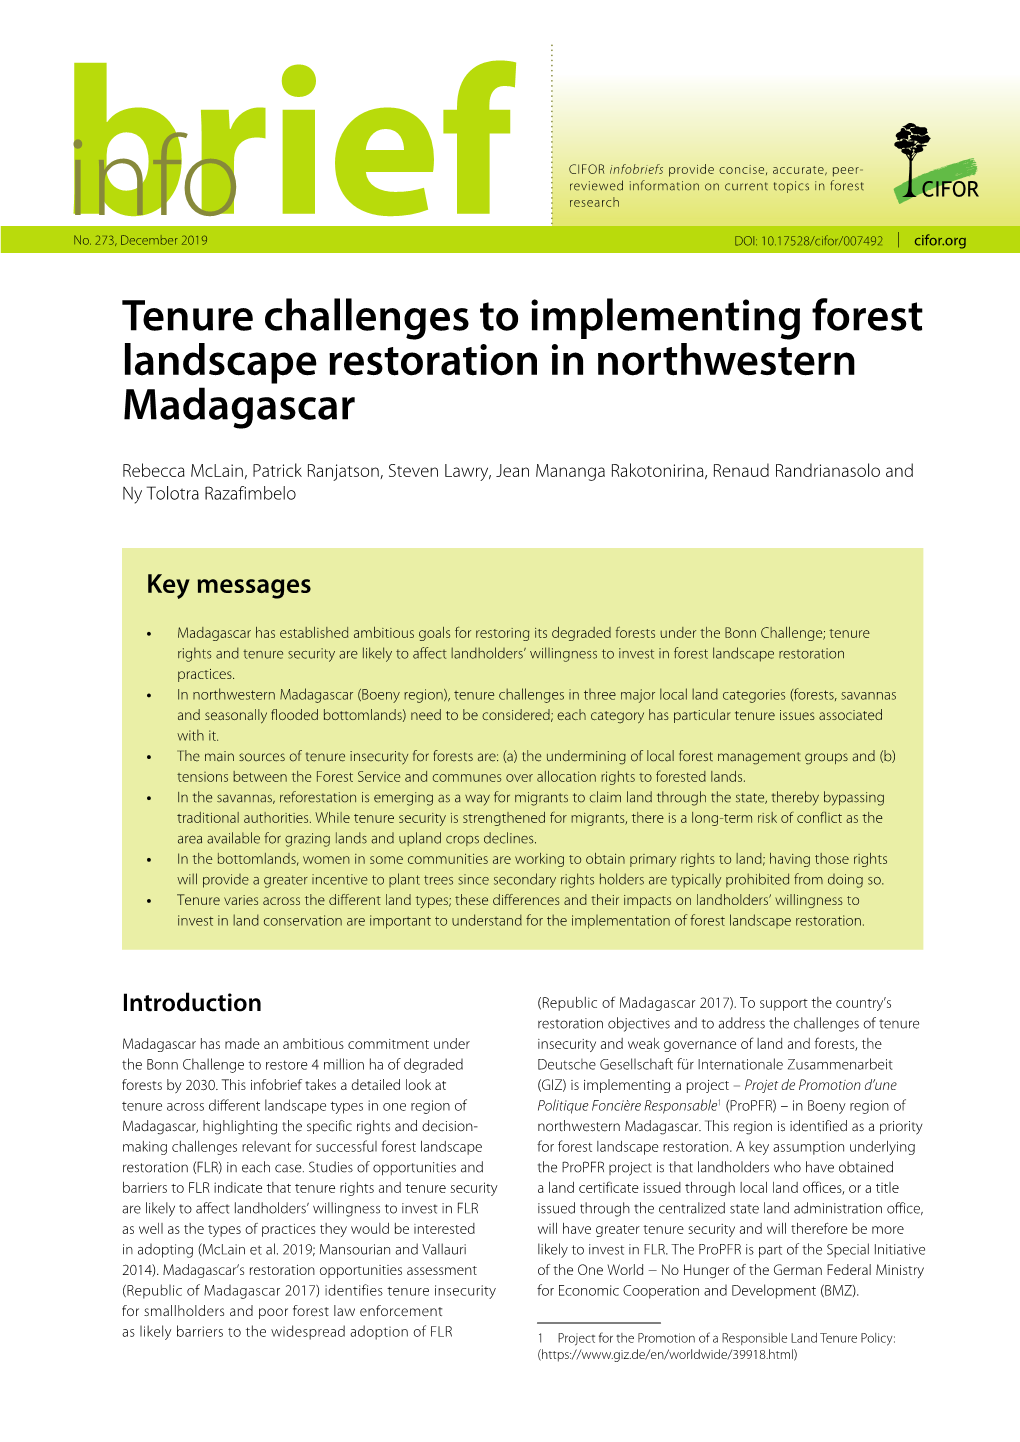 Tenure Challenges to Implementing Forest Landscape Restoration in Northwestern Madagascar